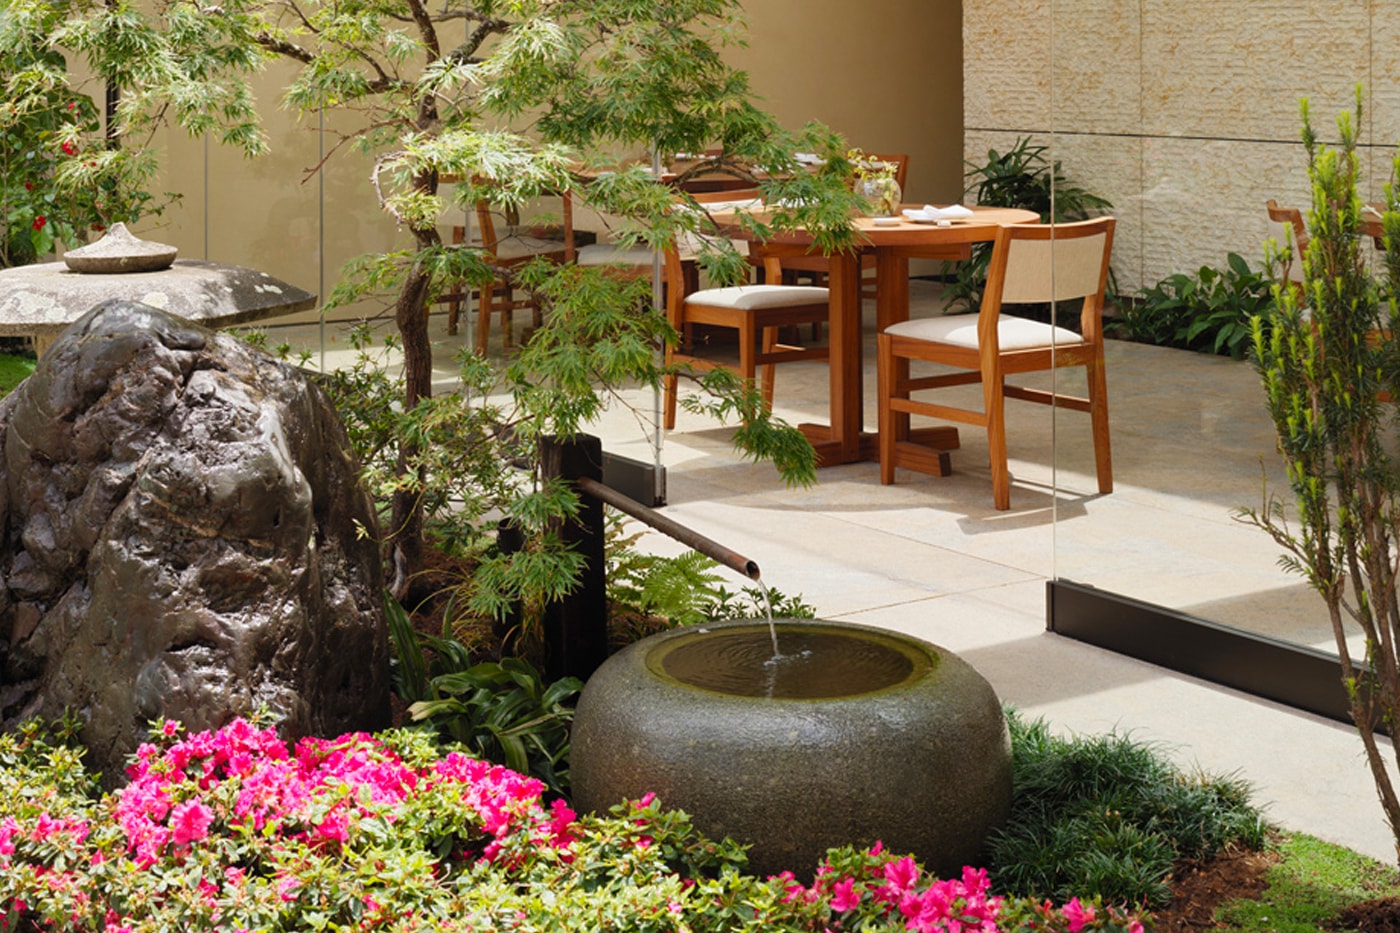 Nobu Hotel Palo Alto Montalba Architects Japanese Garden Lanscaping